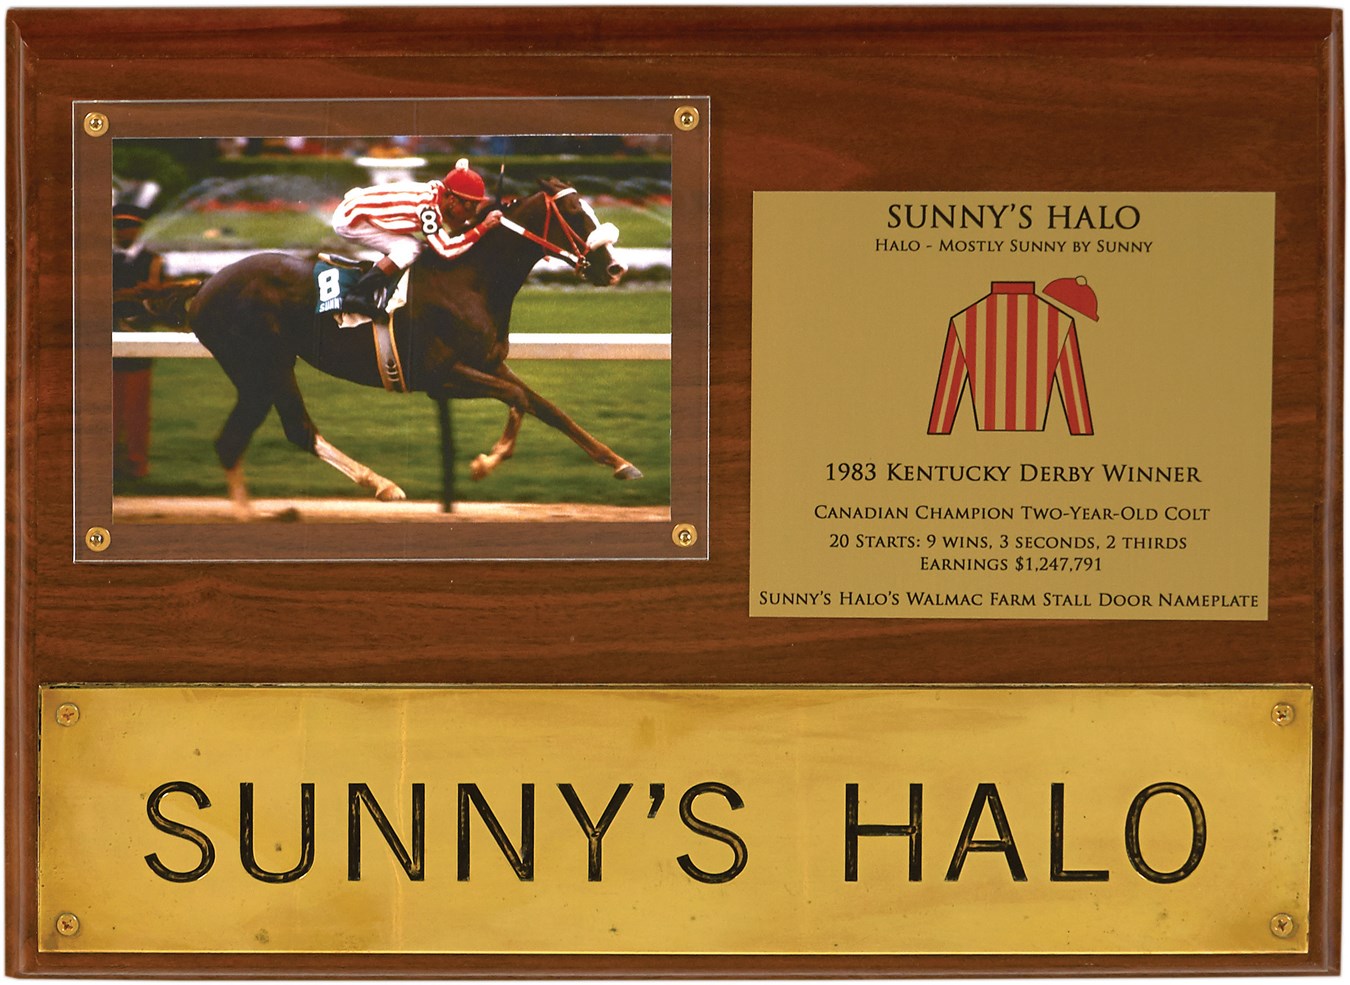 - Sunny's Halo Walmac Farm Stall Door Nameplate